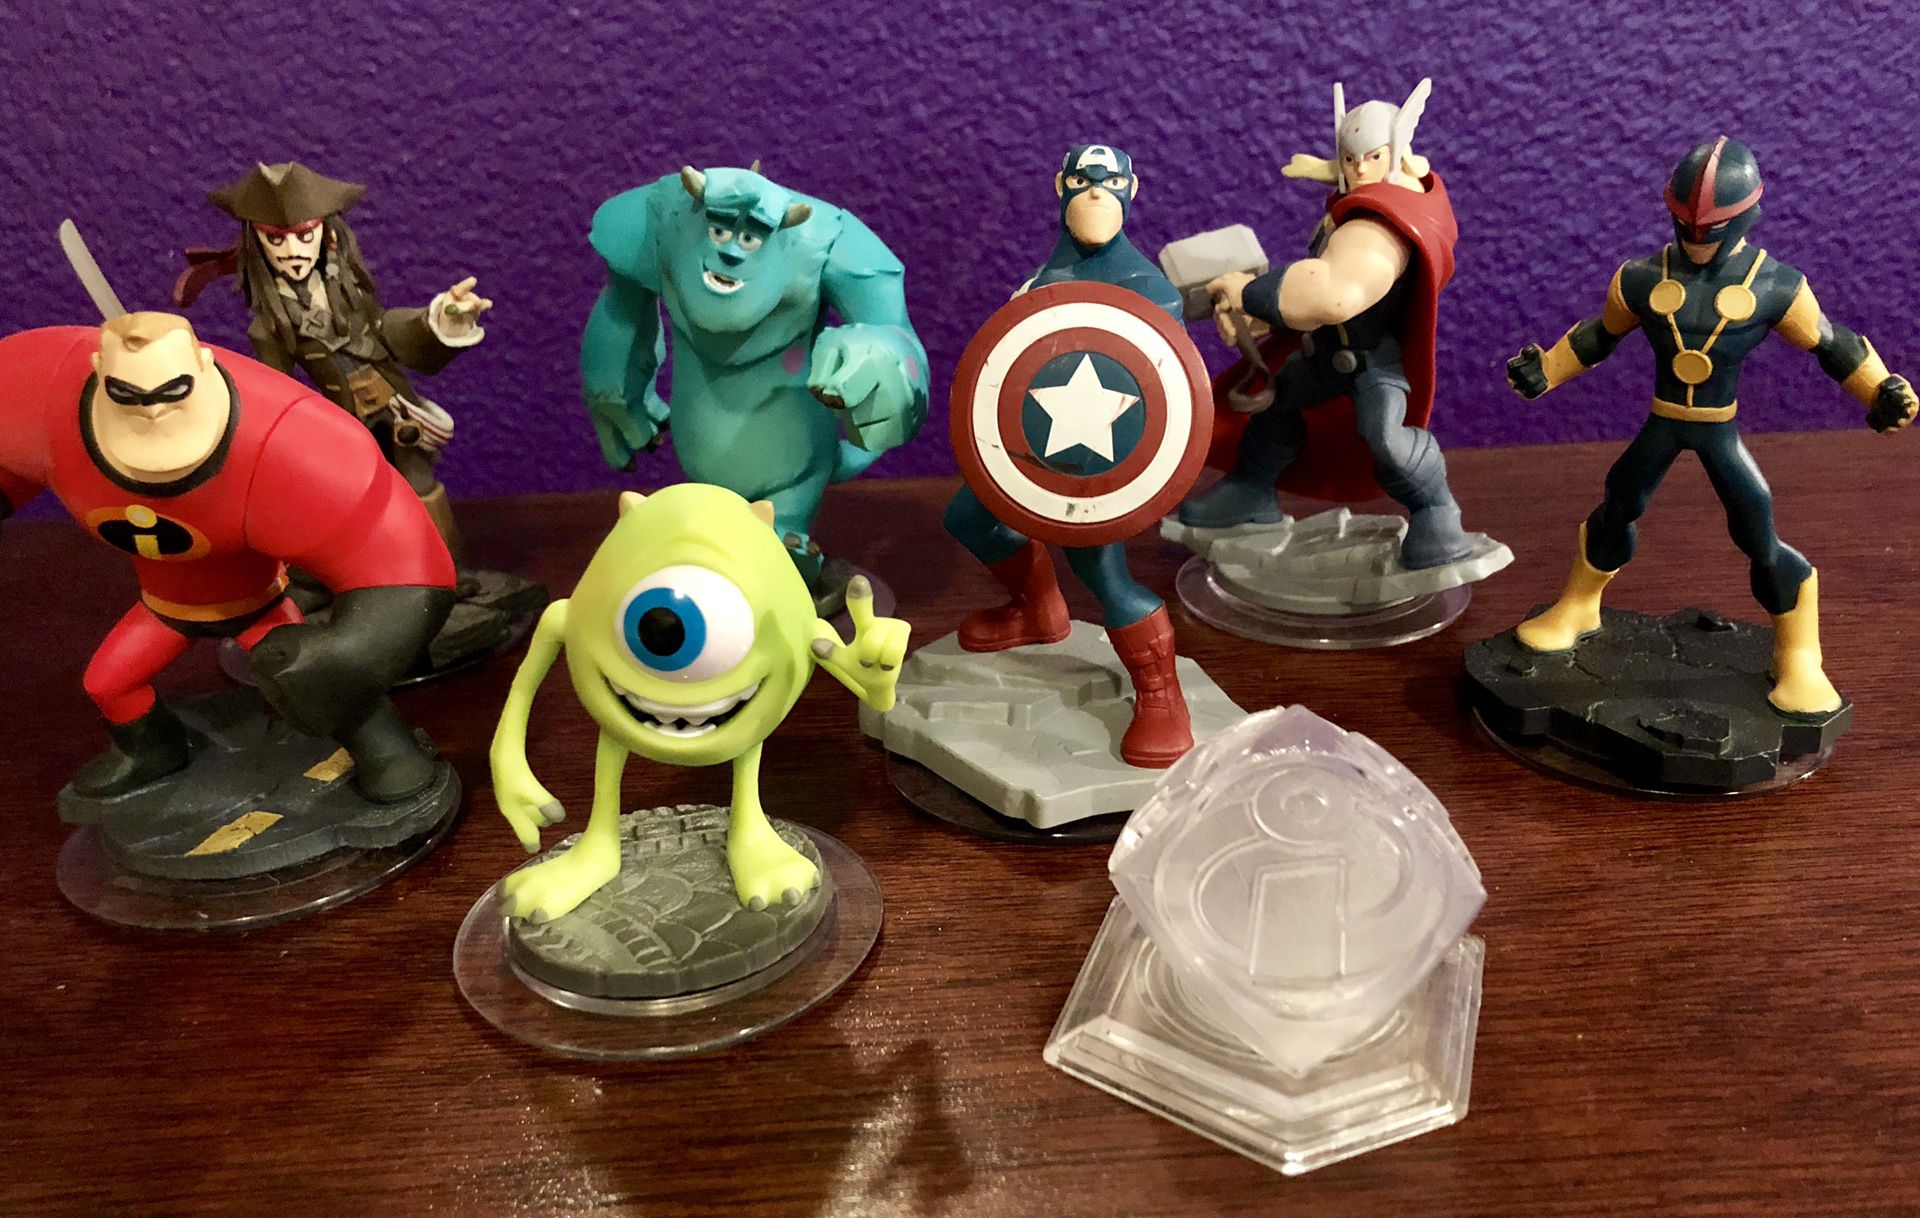 Disney Infinity figures